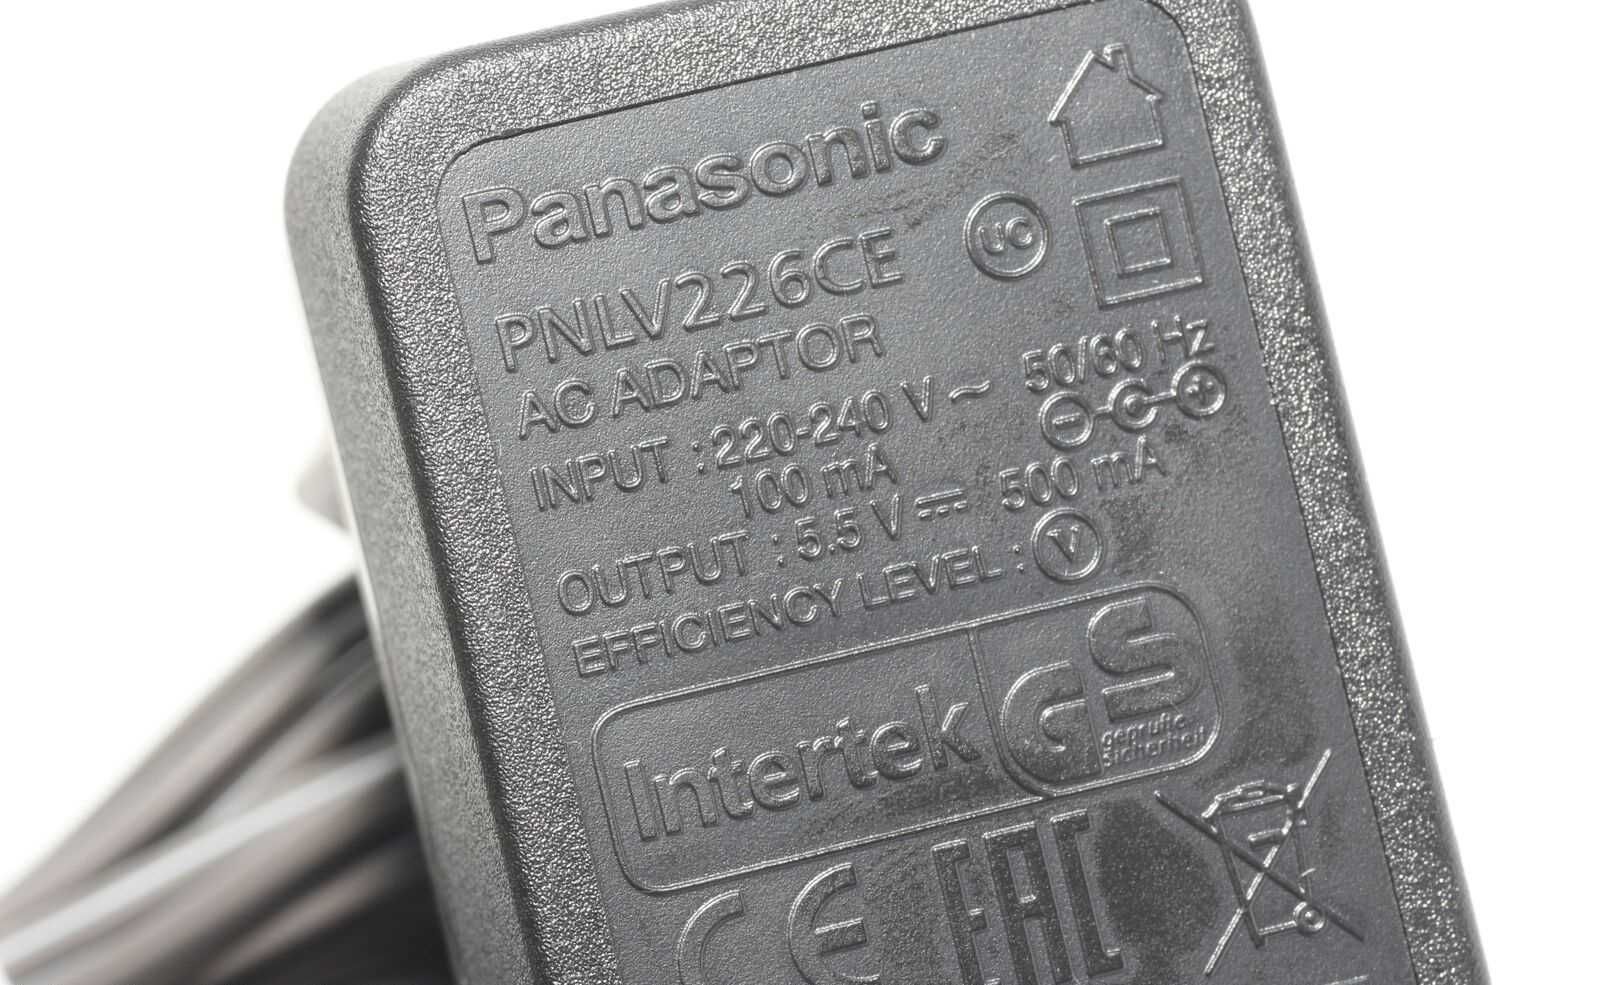 Блок питания Panasonic PNLV226CE Германия 5.5v 500mA Для роутер Т2 итд